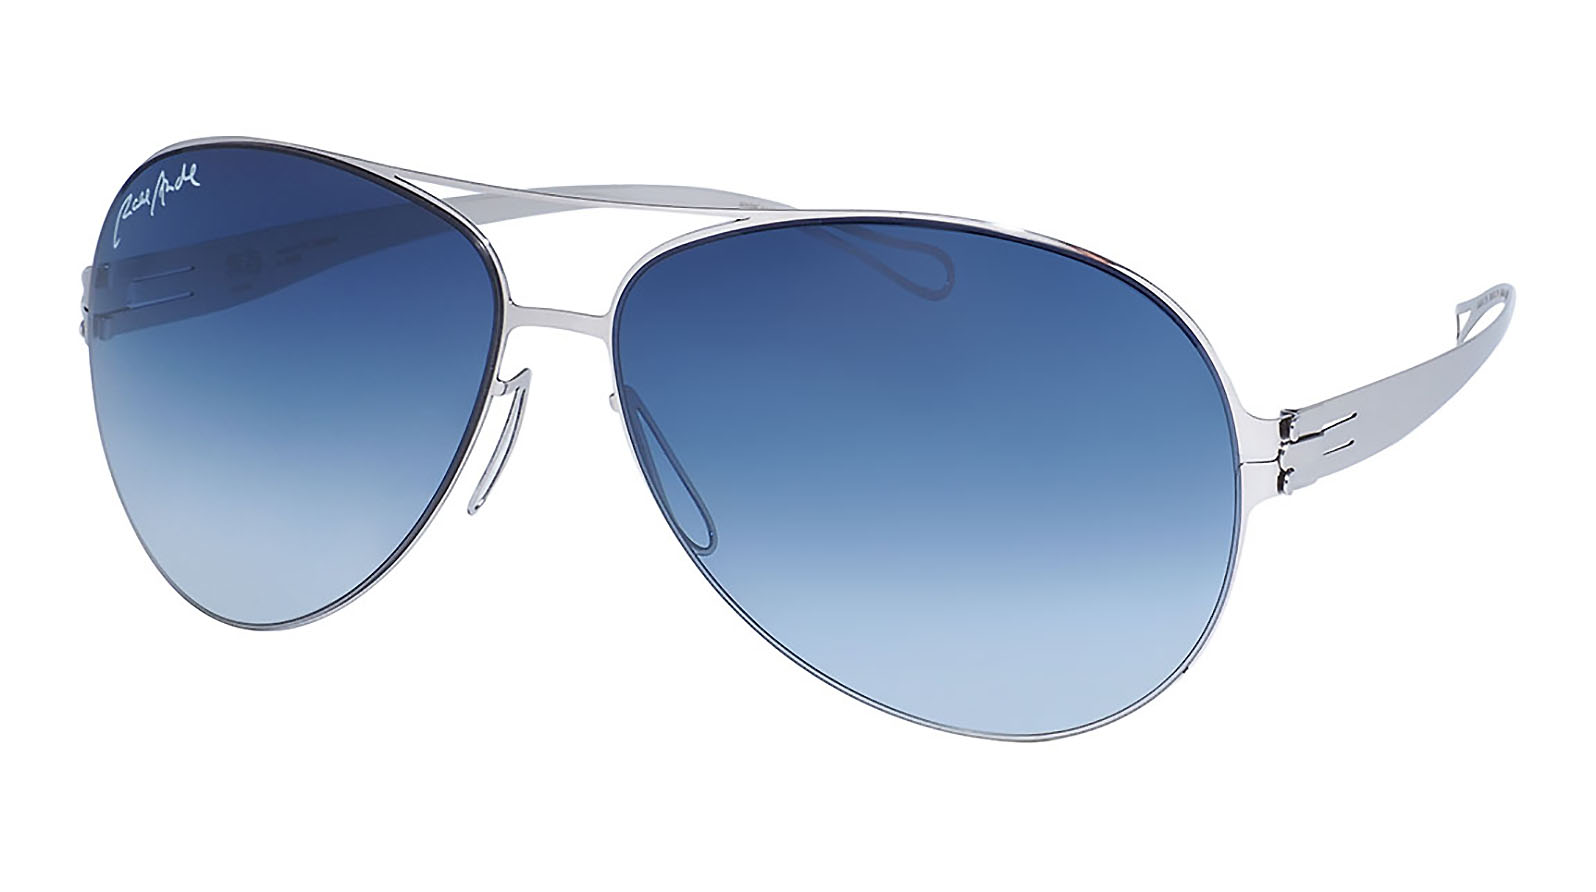 Ralph Anderl Aviator Chrome Blue очки солнцезащитные мужские low